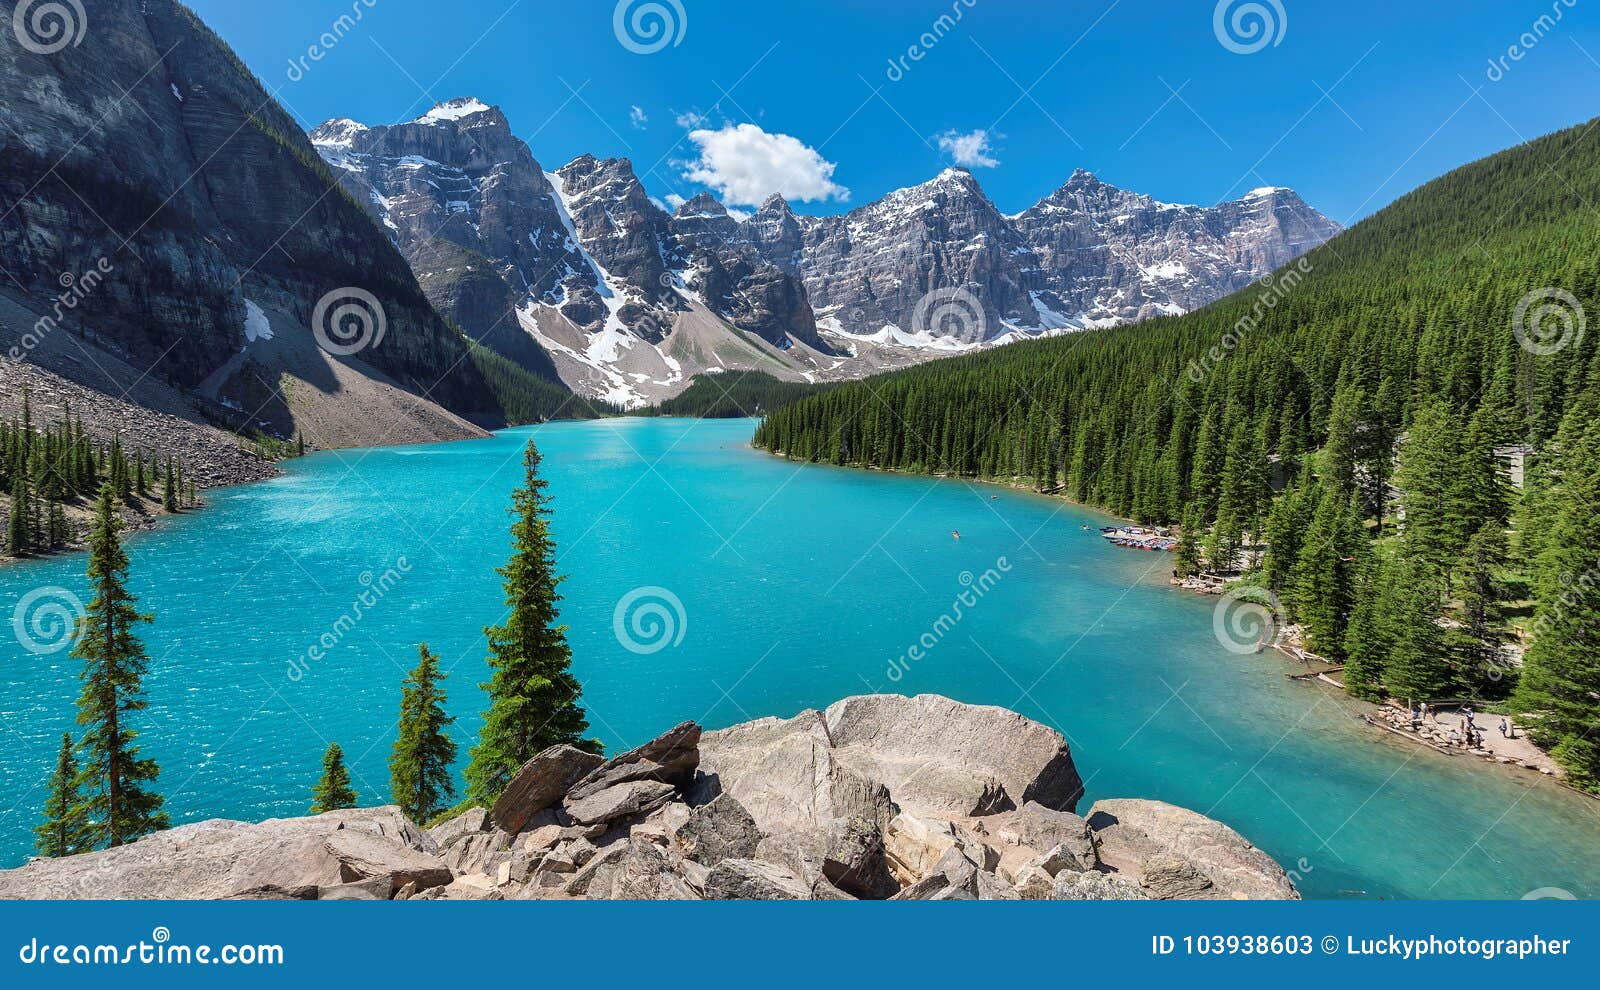 rocky mountains, banff national park, canada.